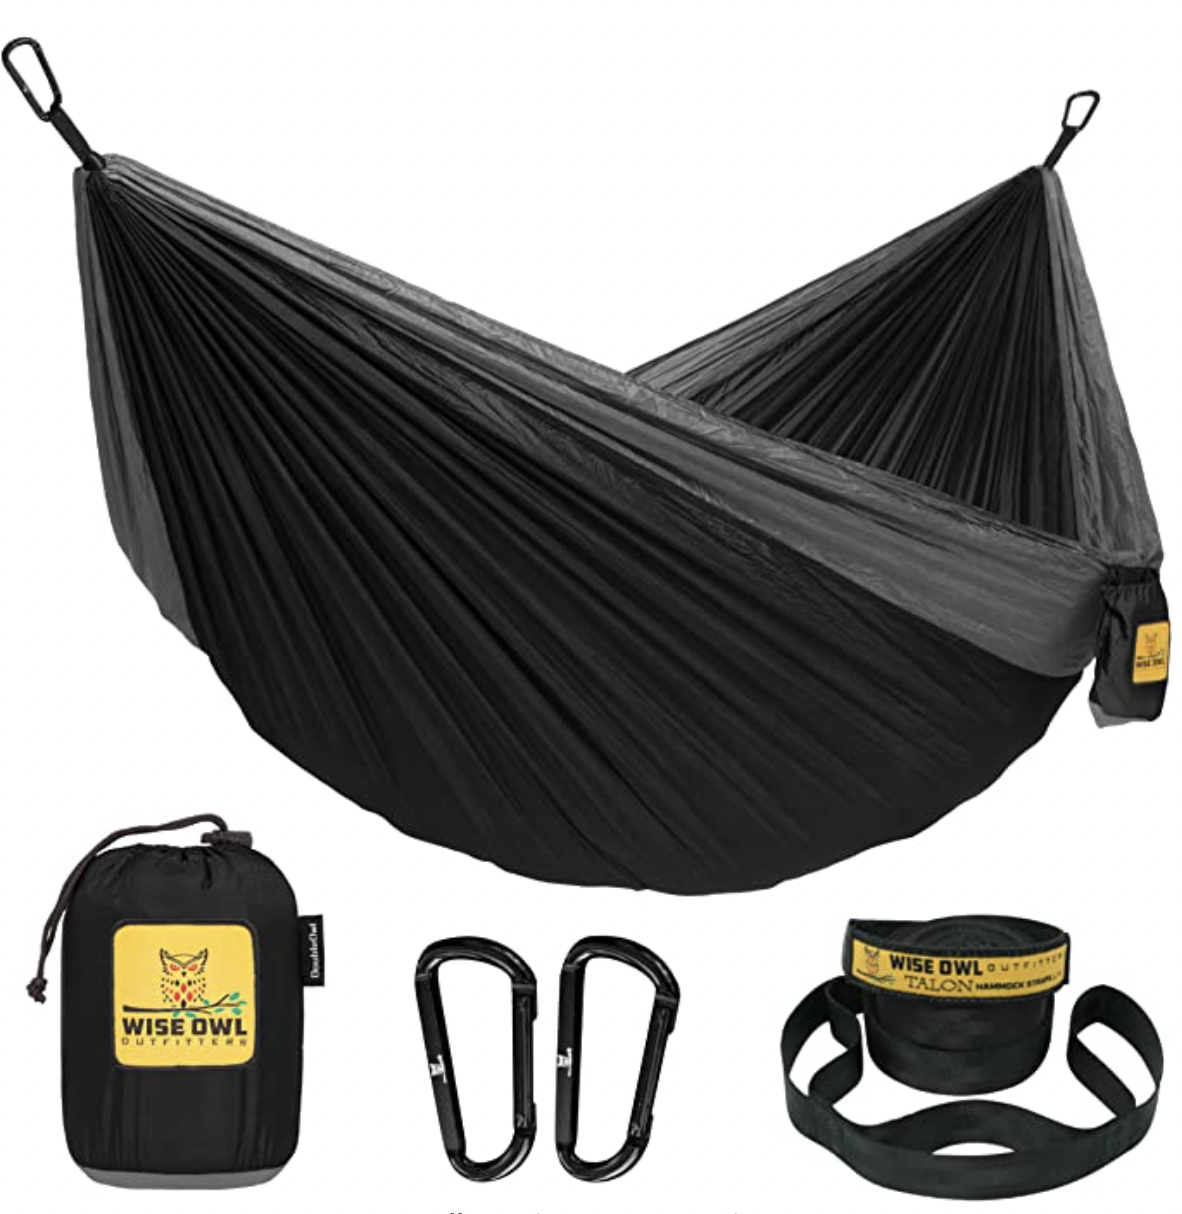 portable hammock useful gift for vanlifers